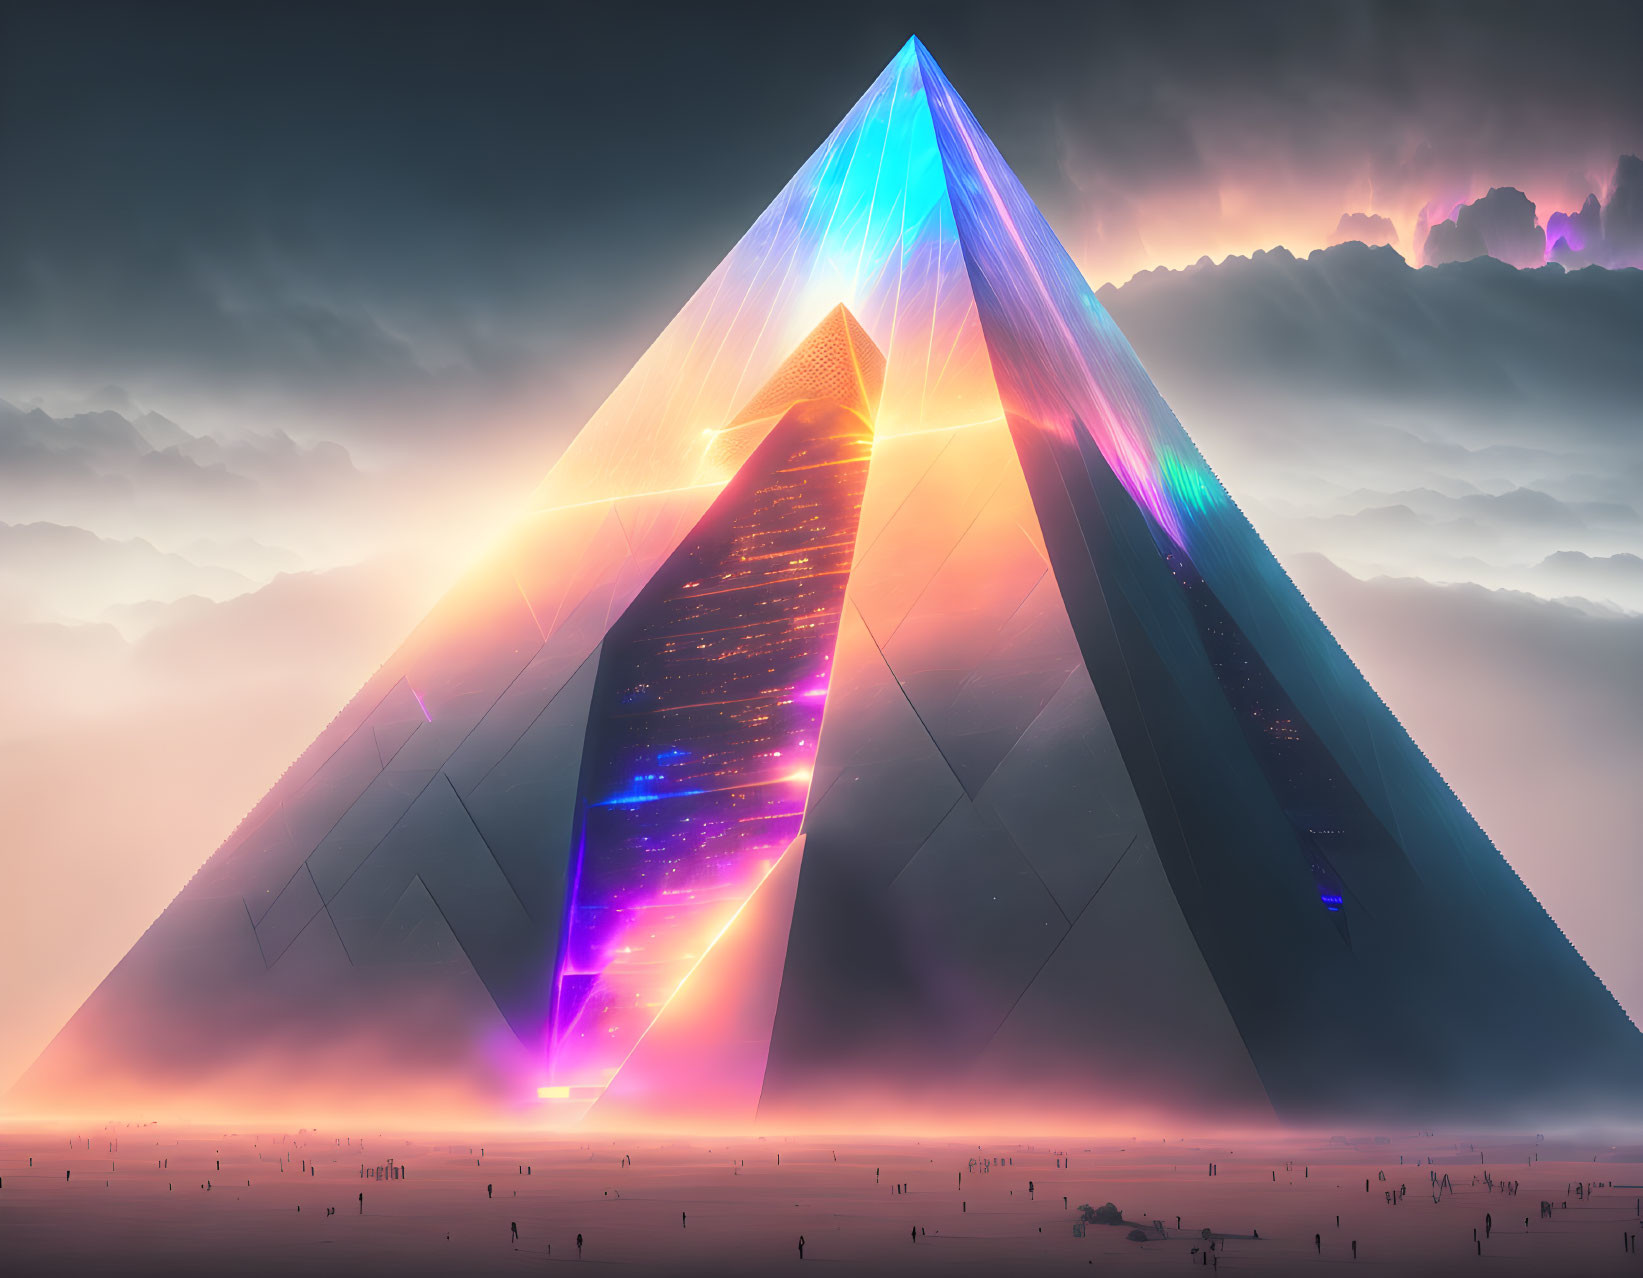 Magician’s pyramid